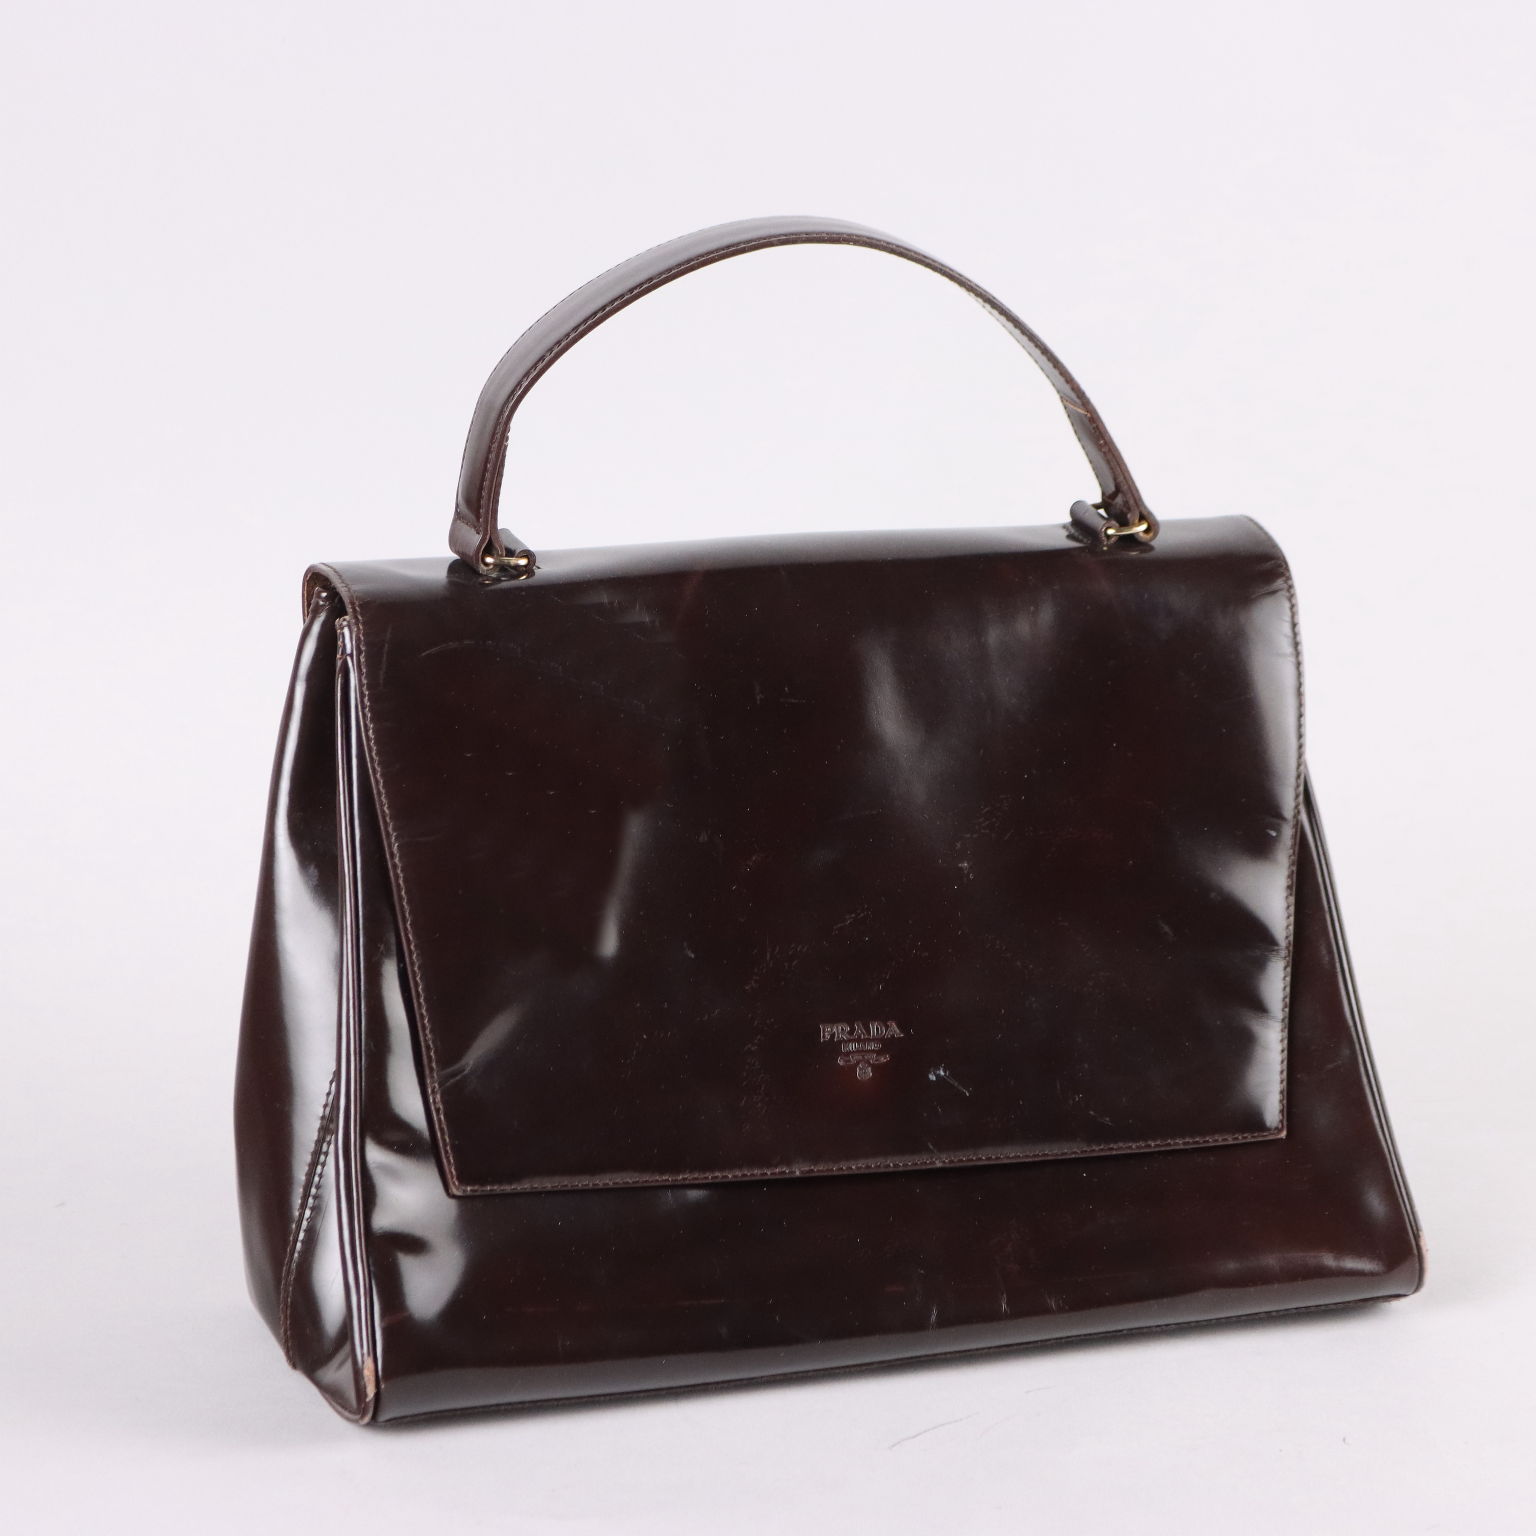 Vintage Prada Bag Brown Leather with Pocket Italy